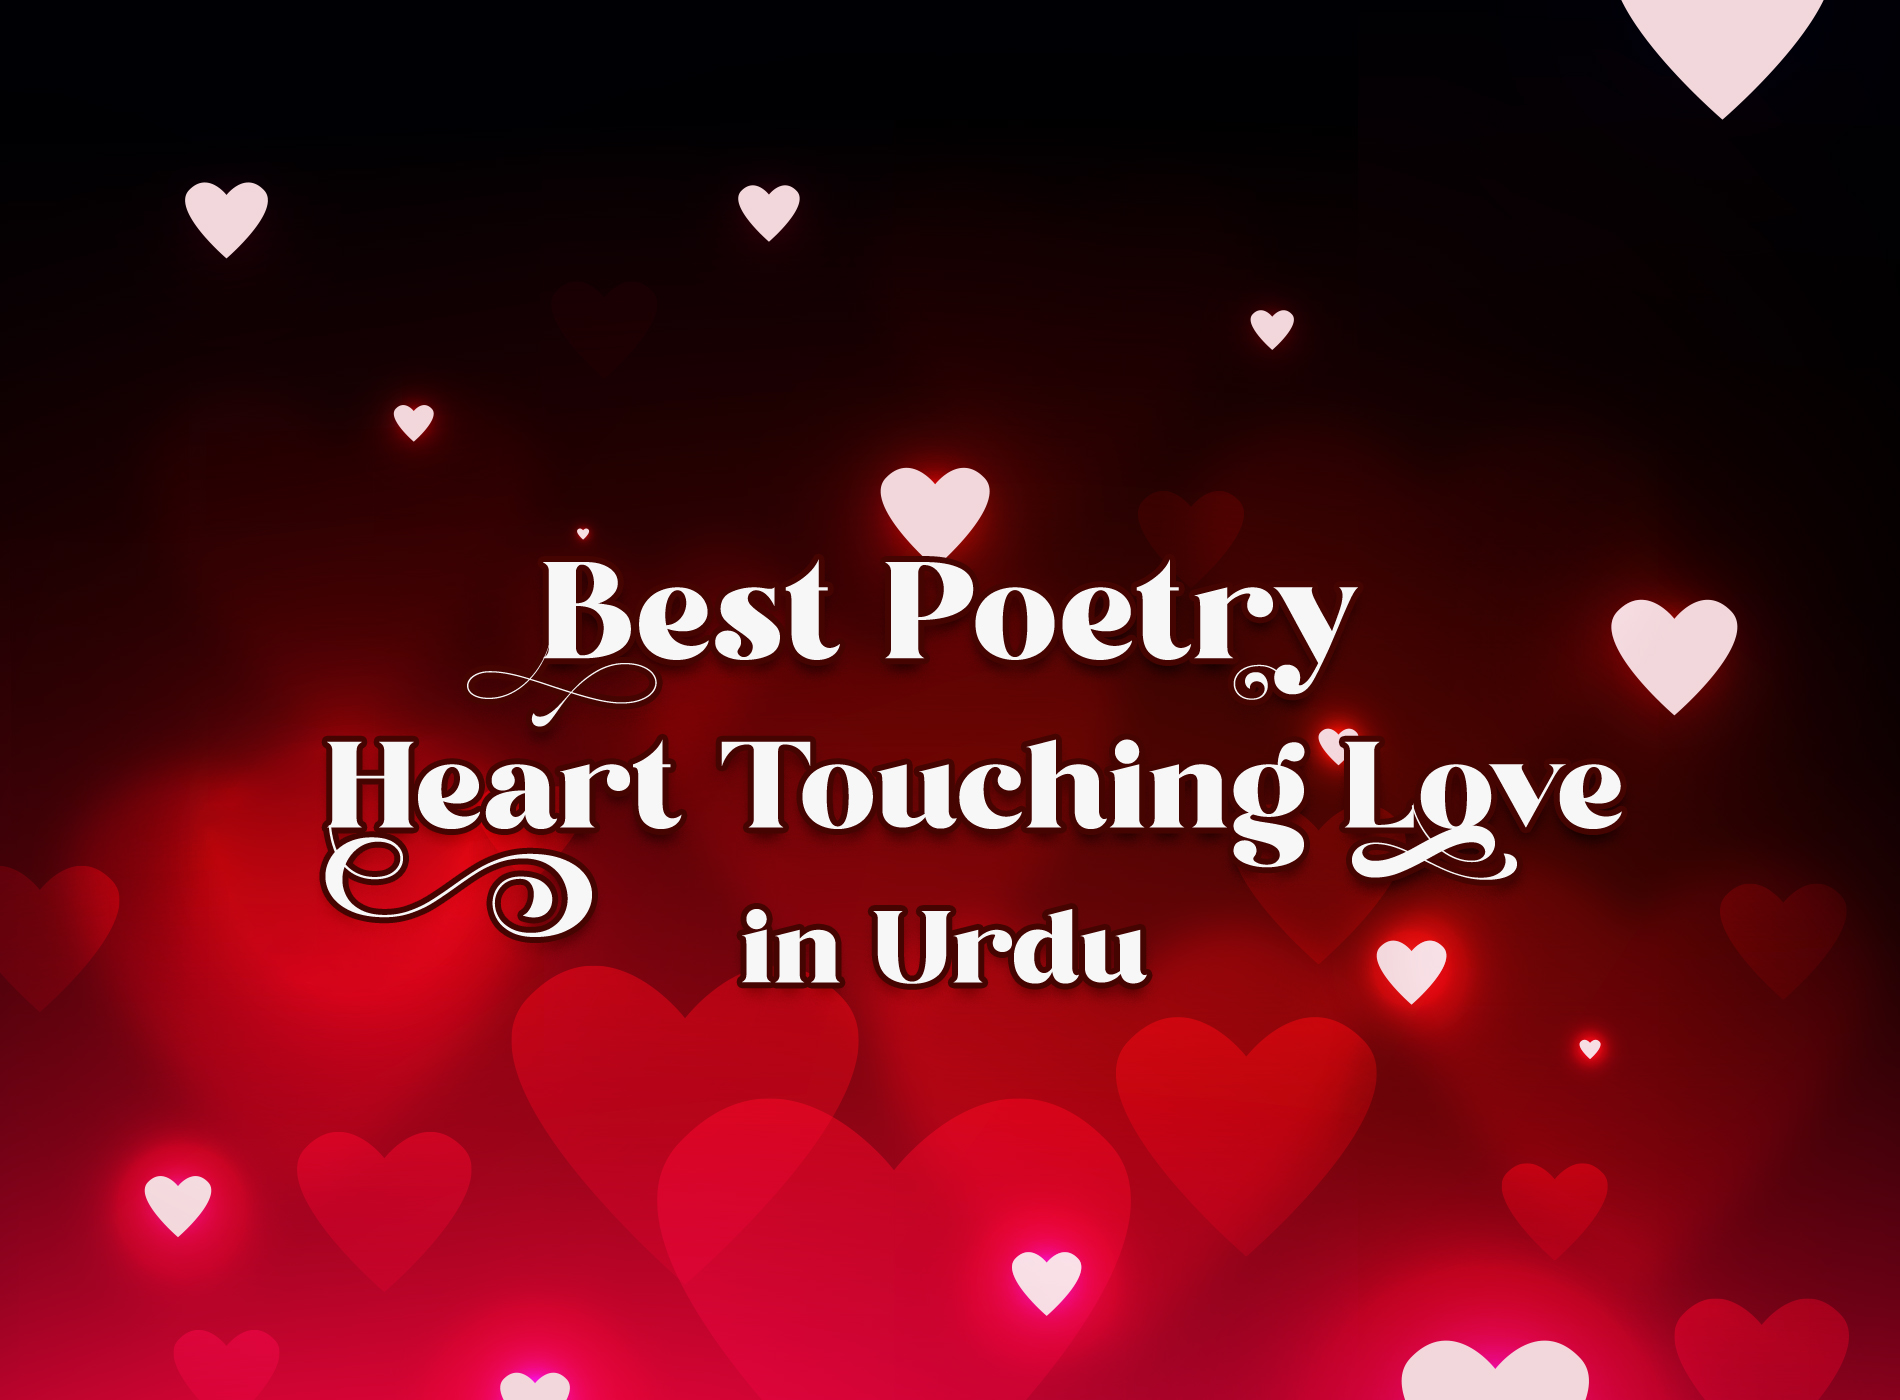 Top 15 Best Poetry About Hearts in Urdu